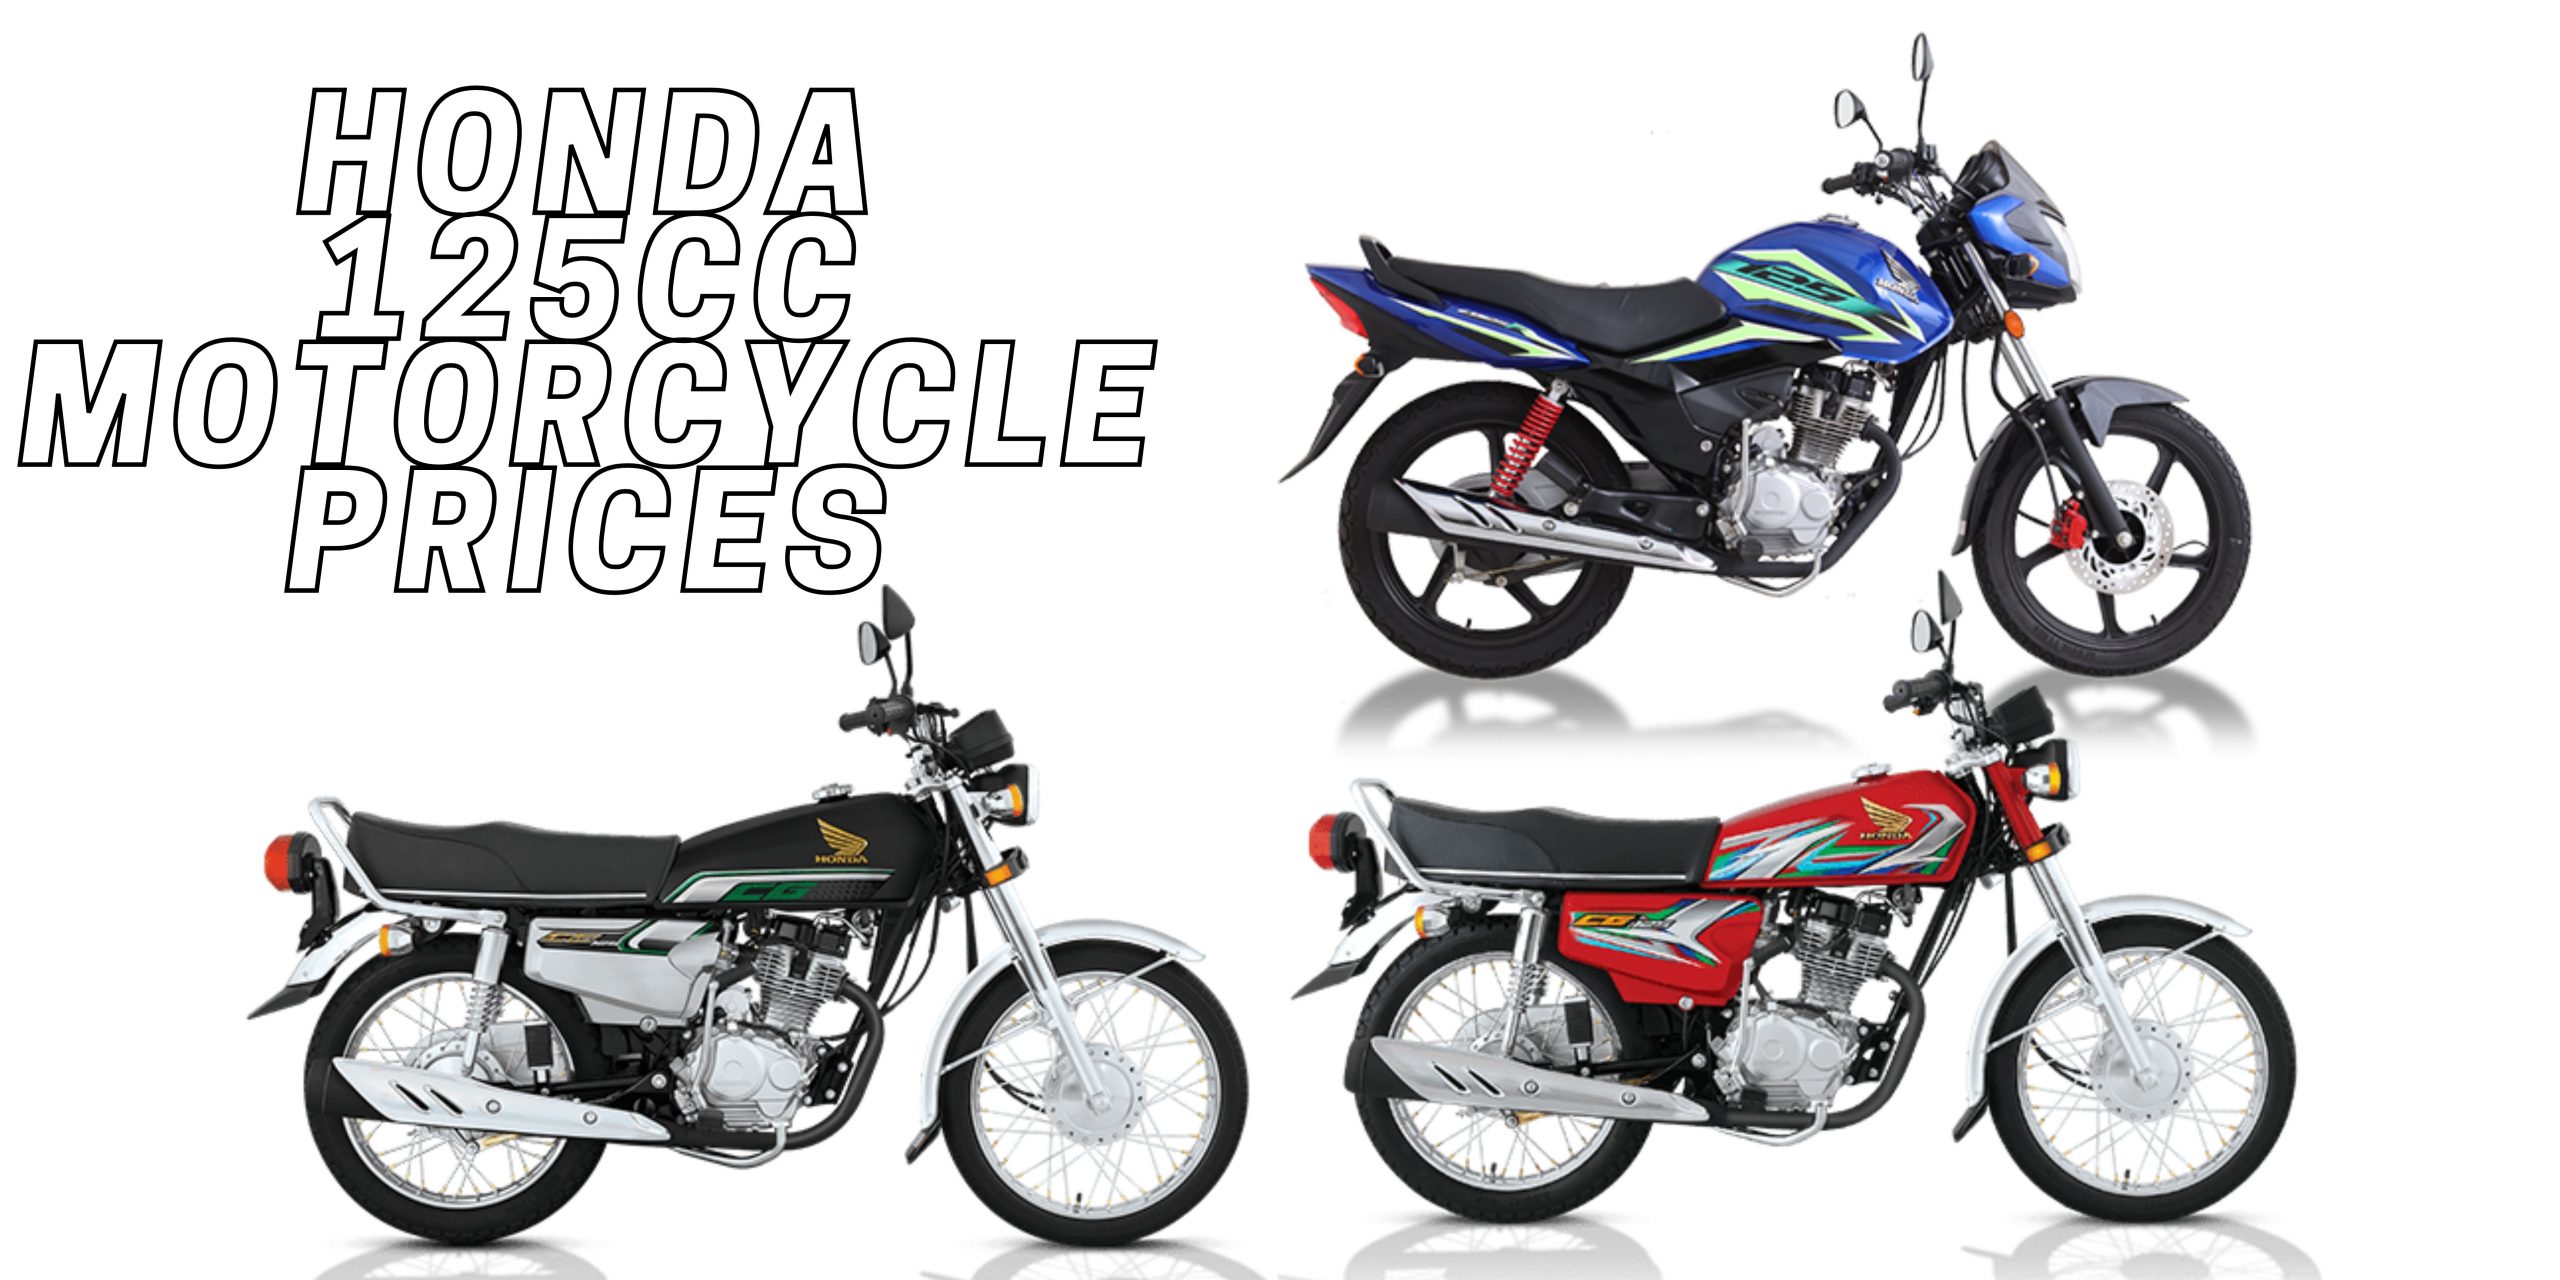 HONDA 125CC MOTORCYCLE PRICES